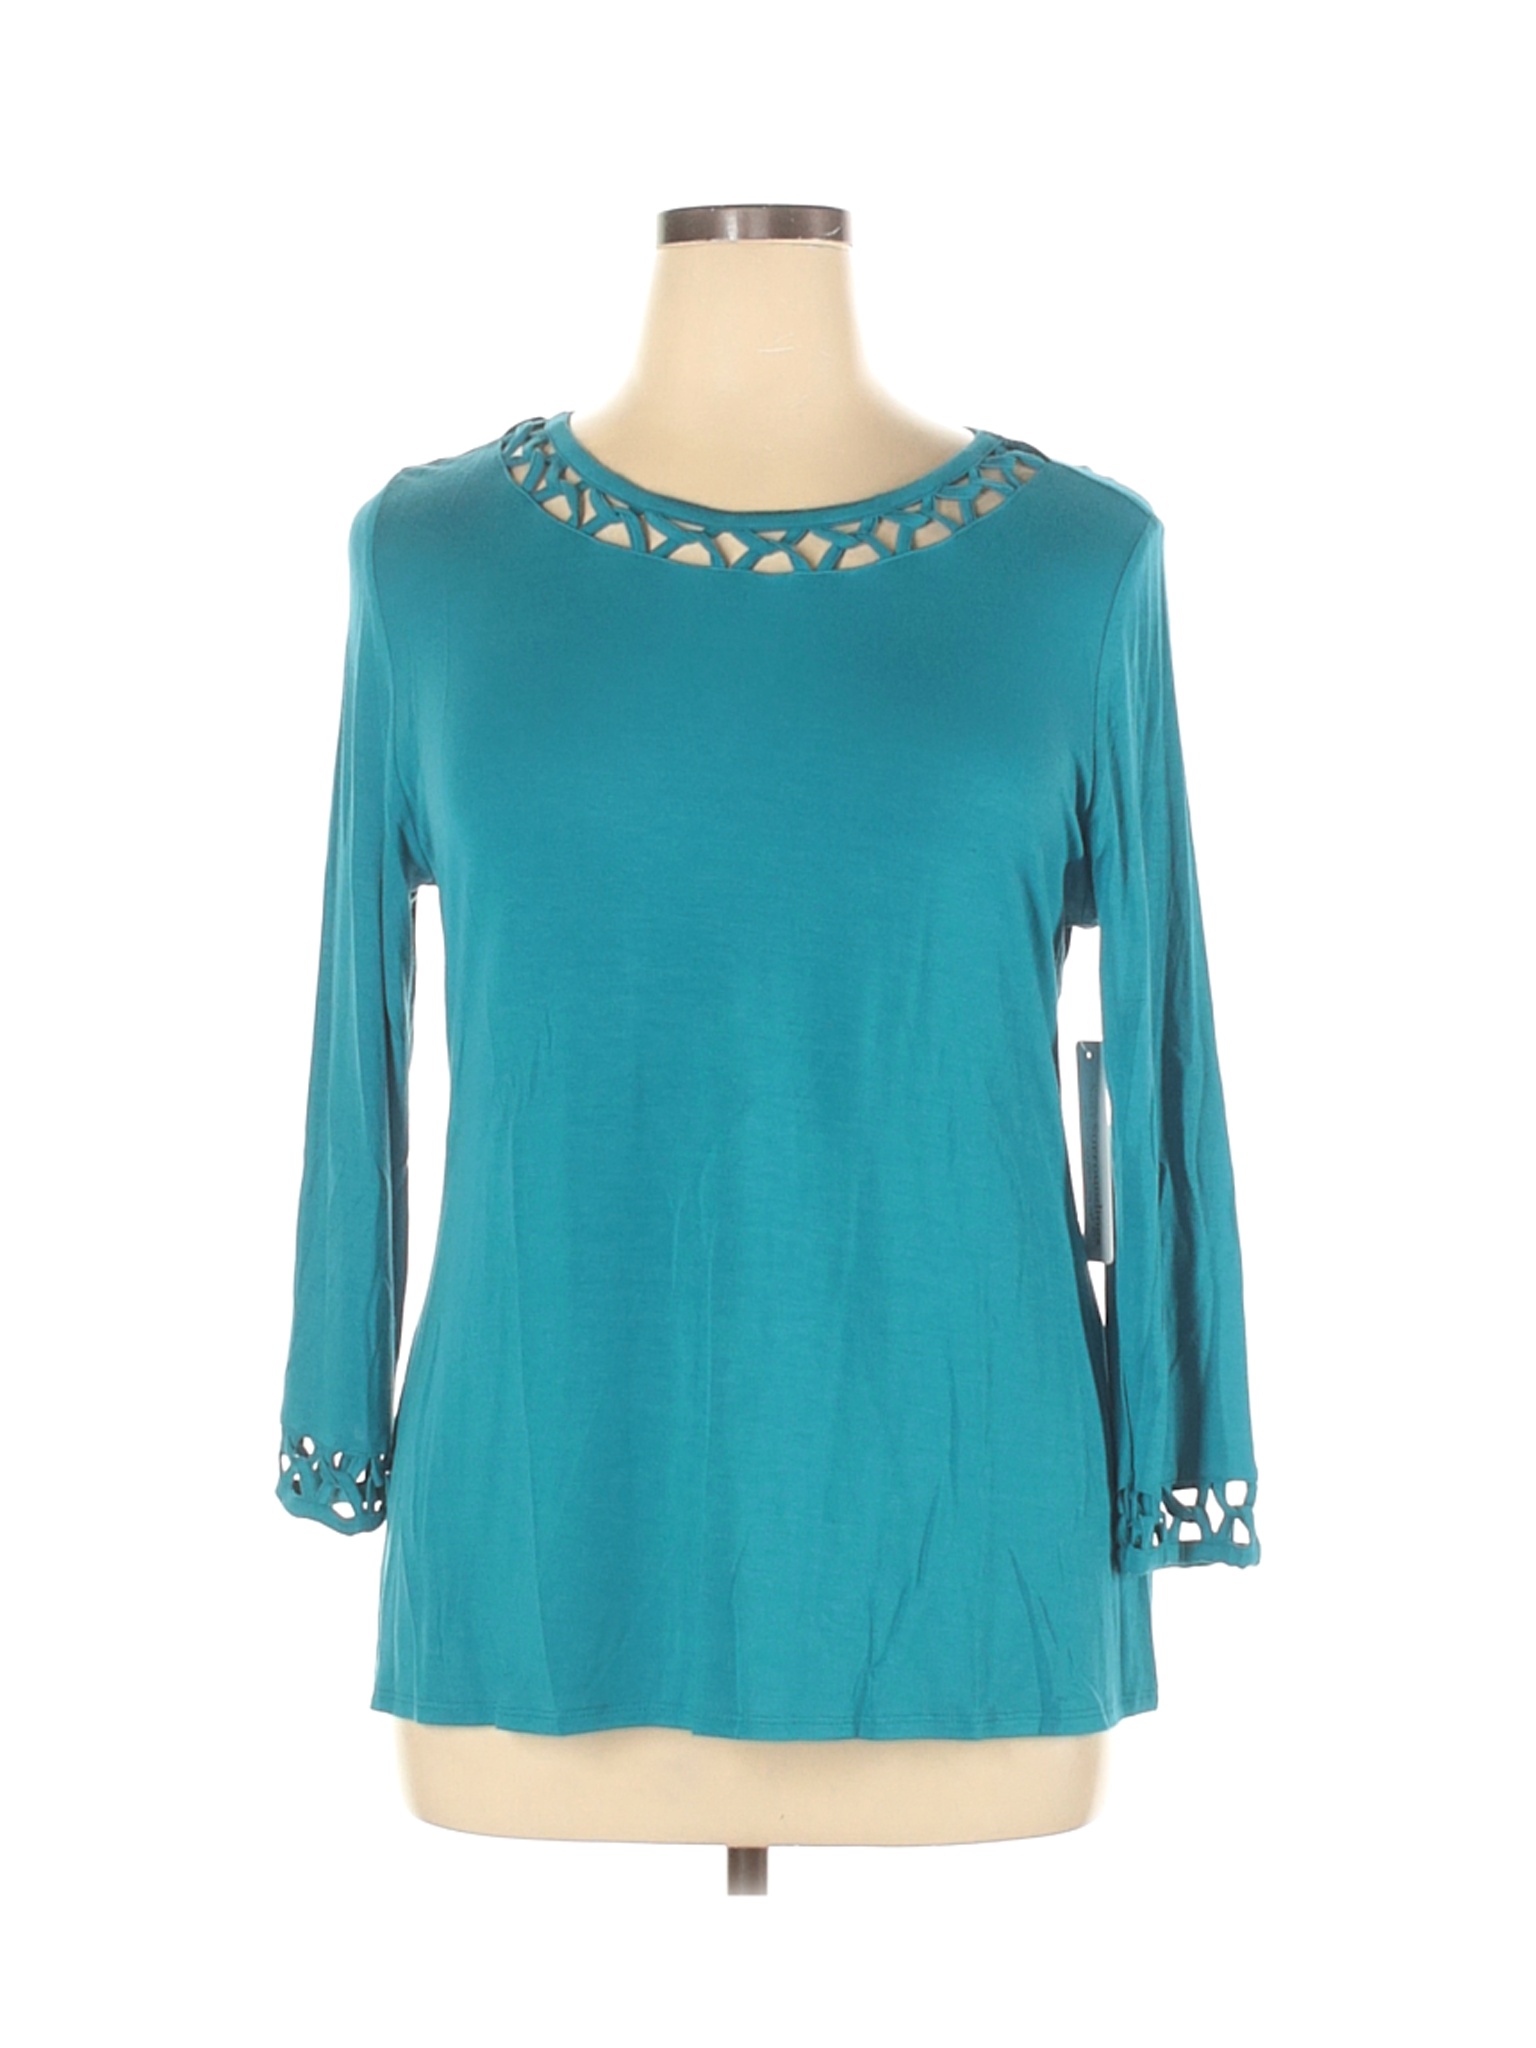 NWT Soft Surroundings Women Green Long Sleeve Top XL | eBay